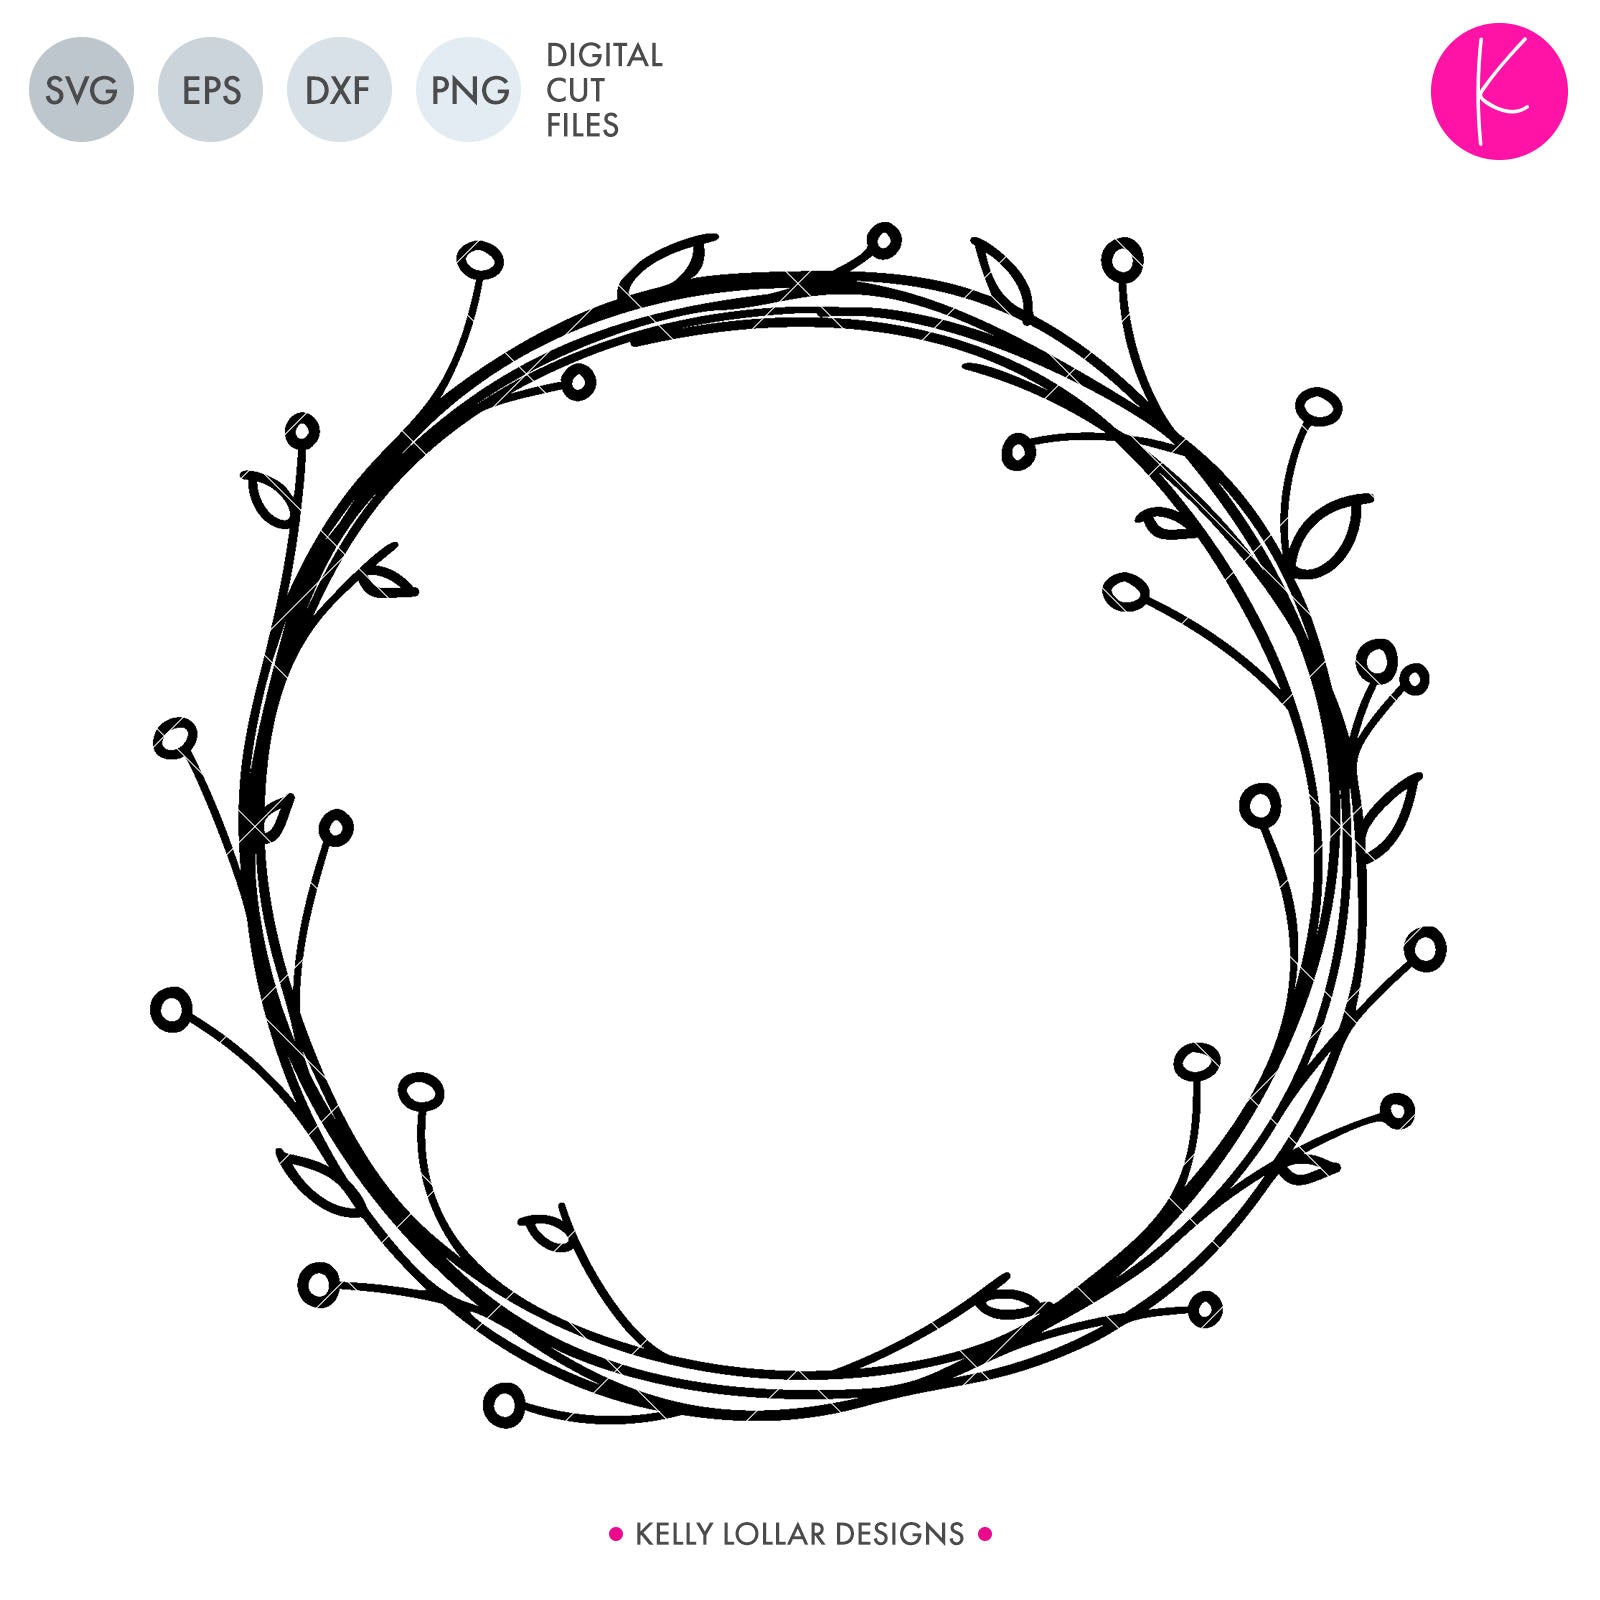 Download Floral Wreath SVG File | Kelly Lollar Designs